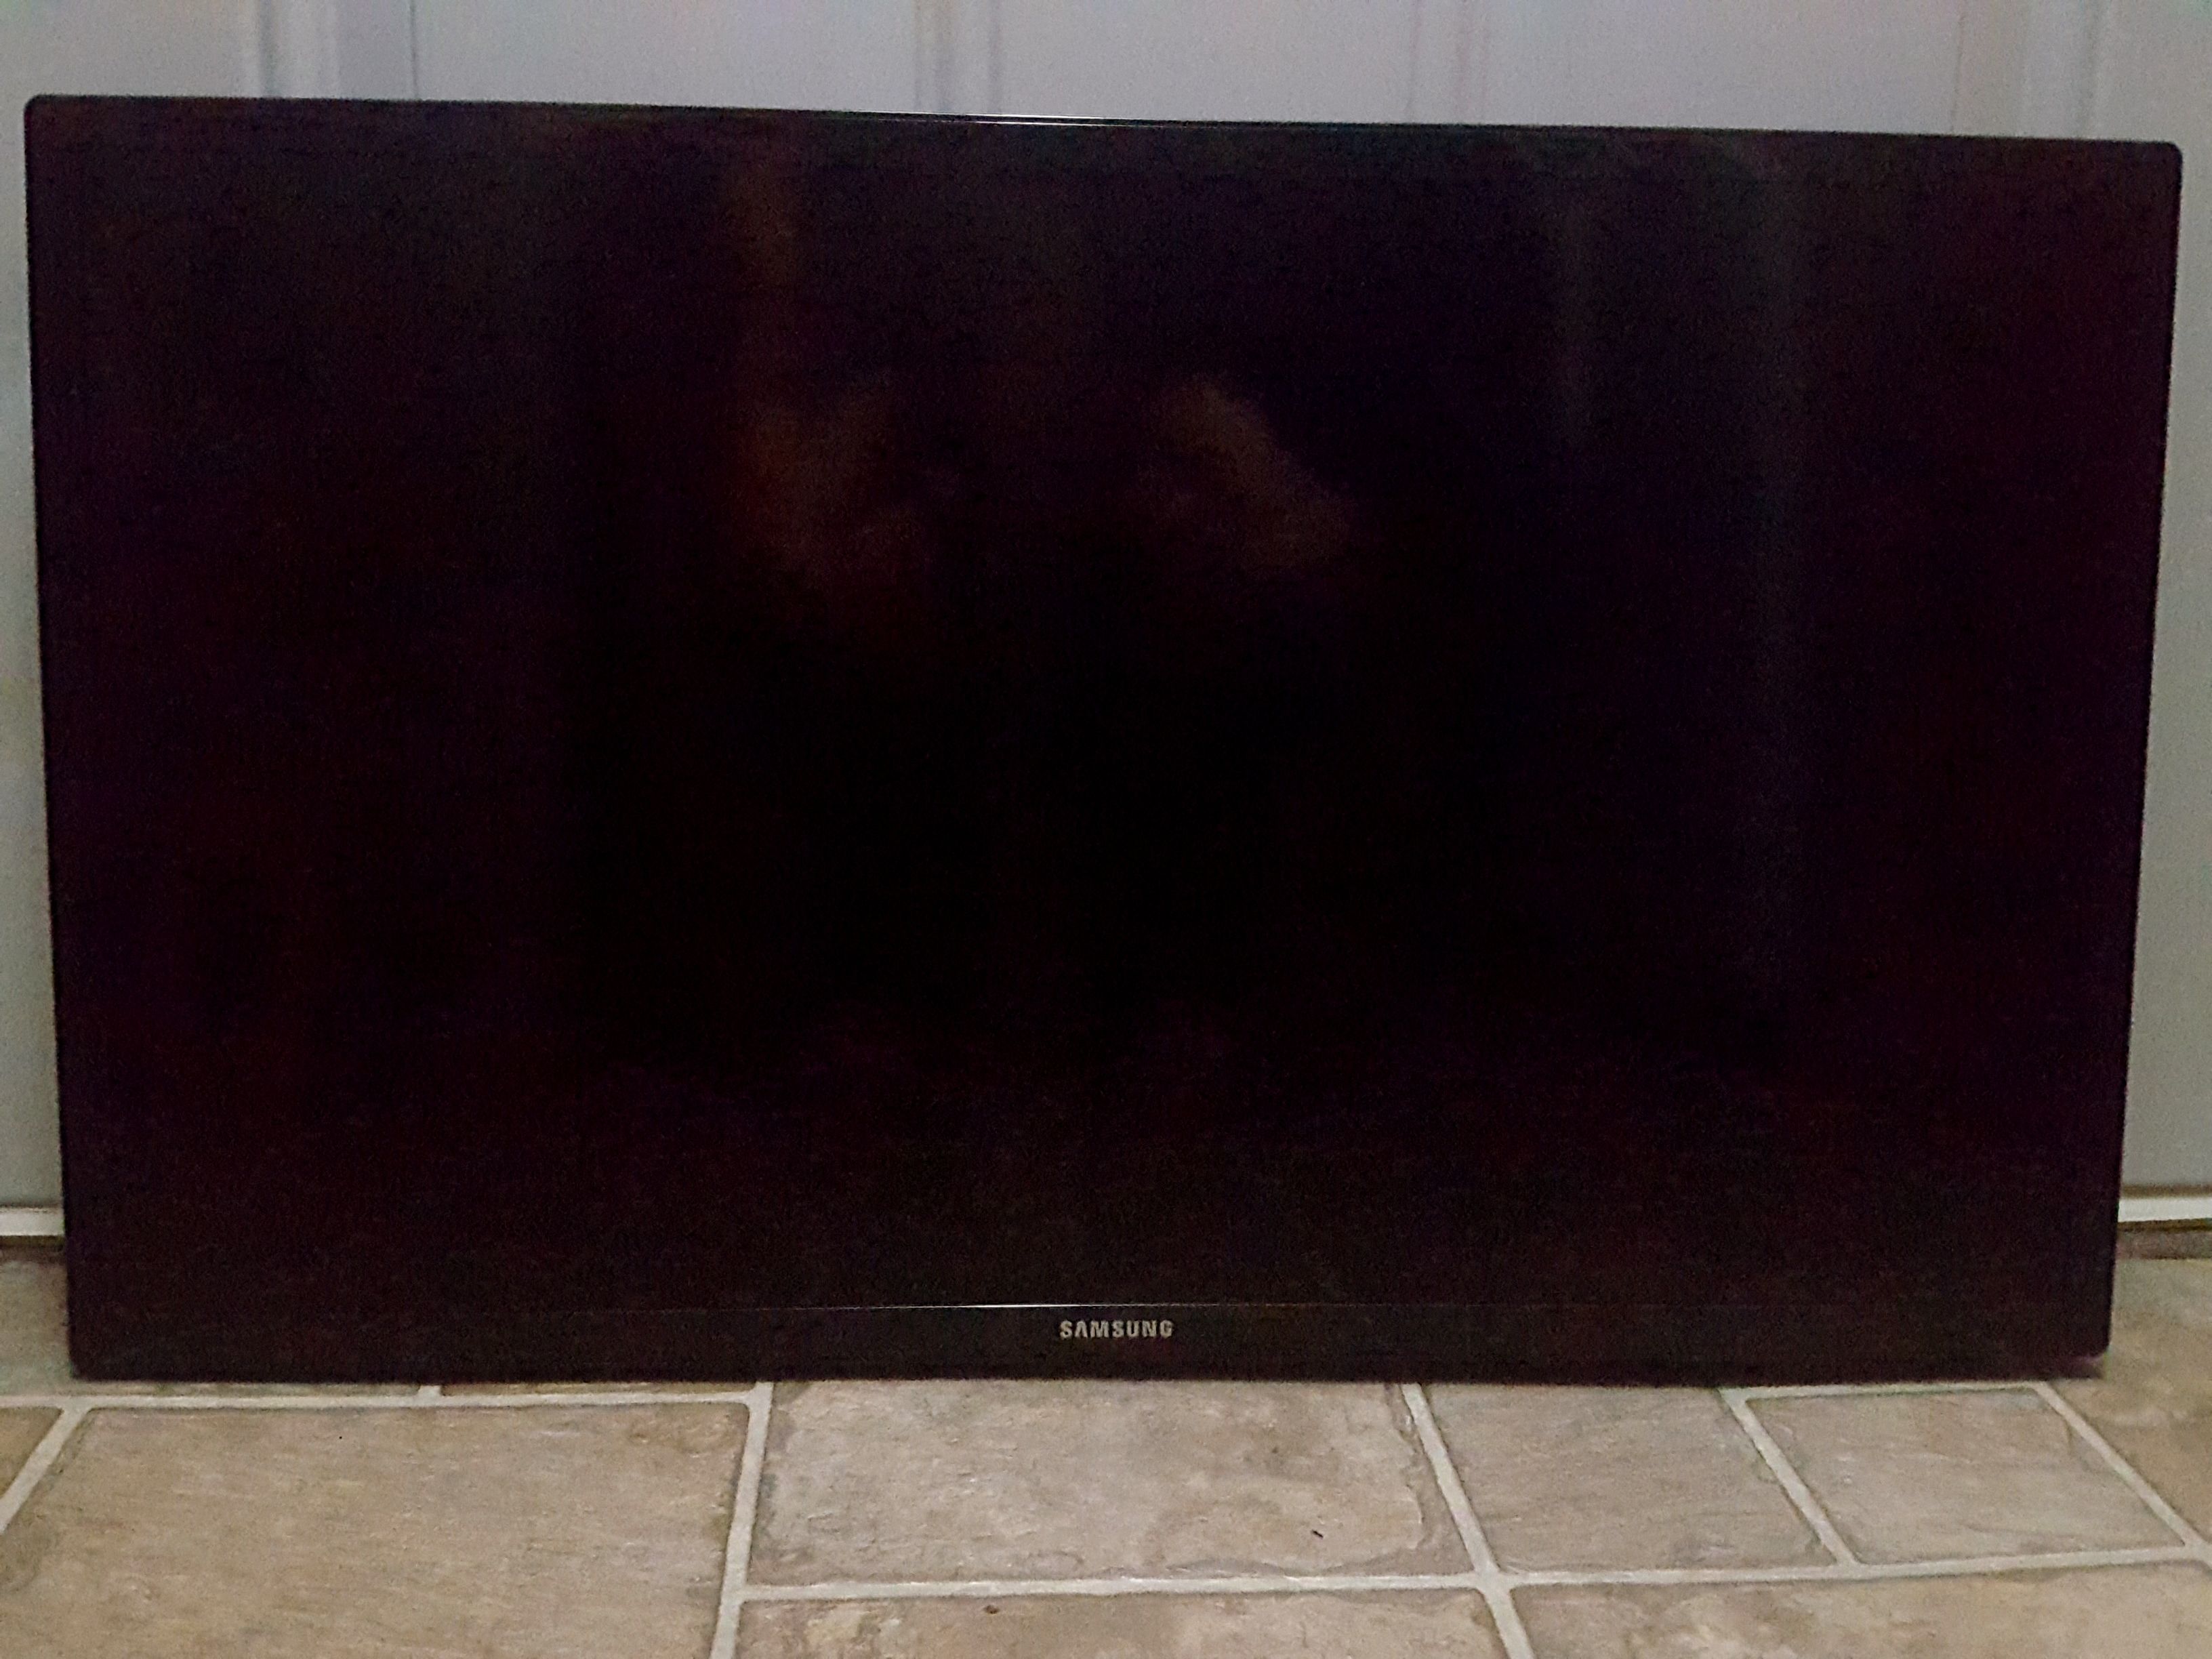 Samsung 28" LED Flatscreen TV/monitor- great condition!